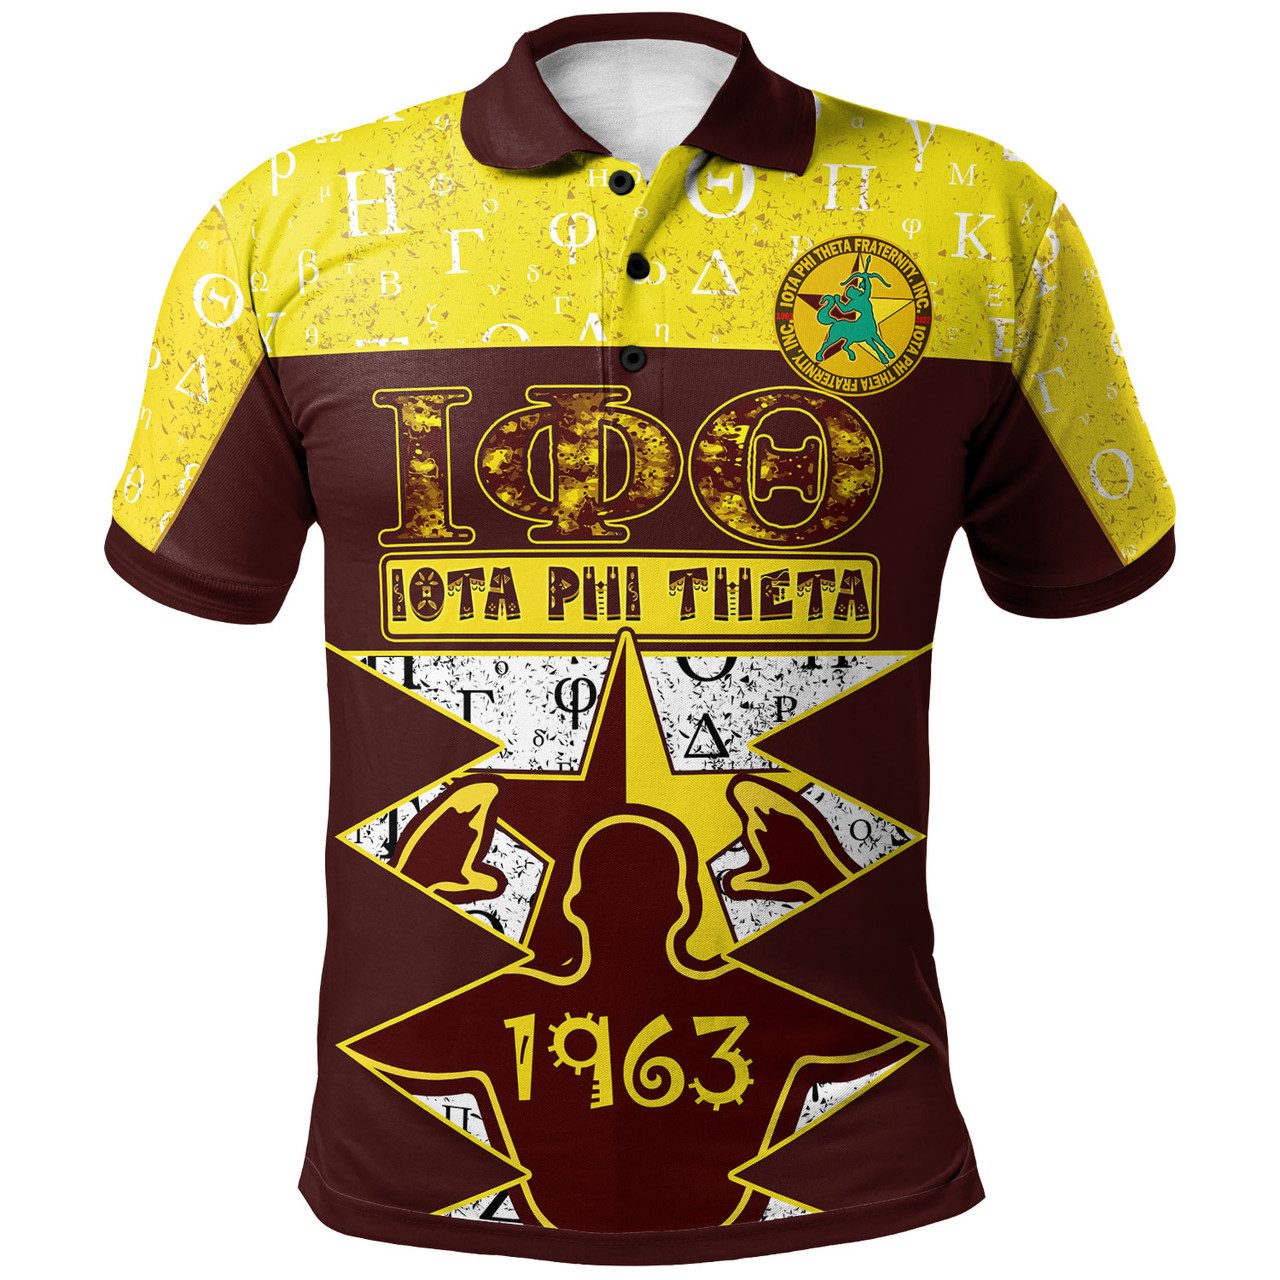 Iota Phi Theta Polo Shirt – Custom Iota Phi Theta Fraternity Greek Alphabet 1963 Polo Shirt